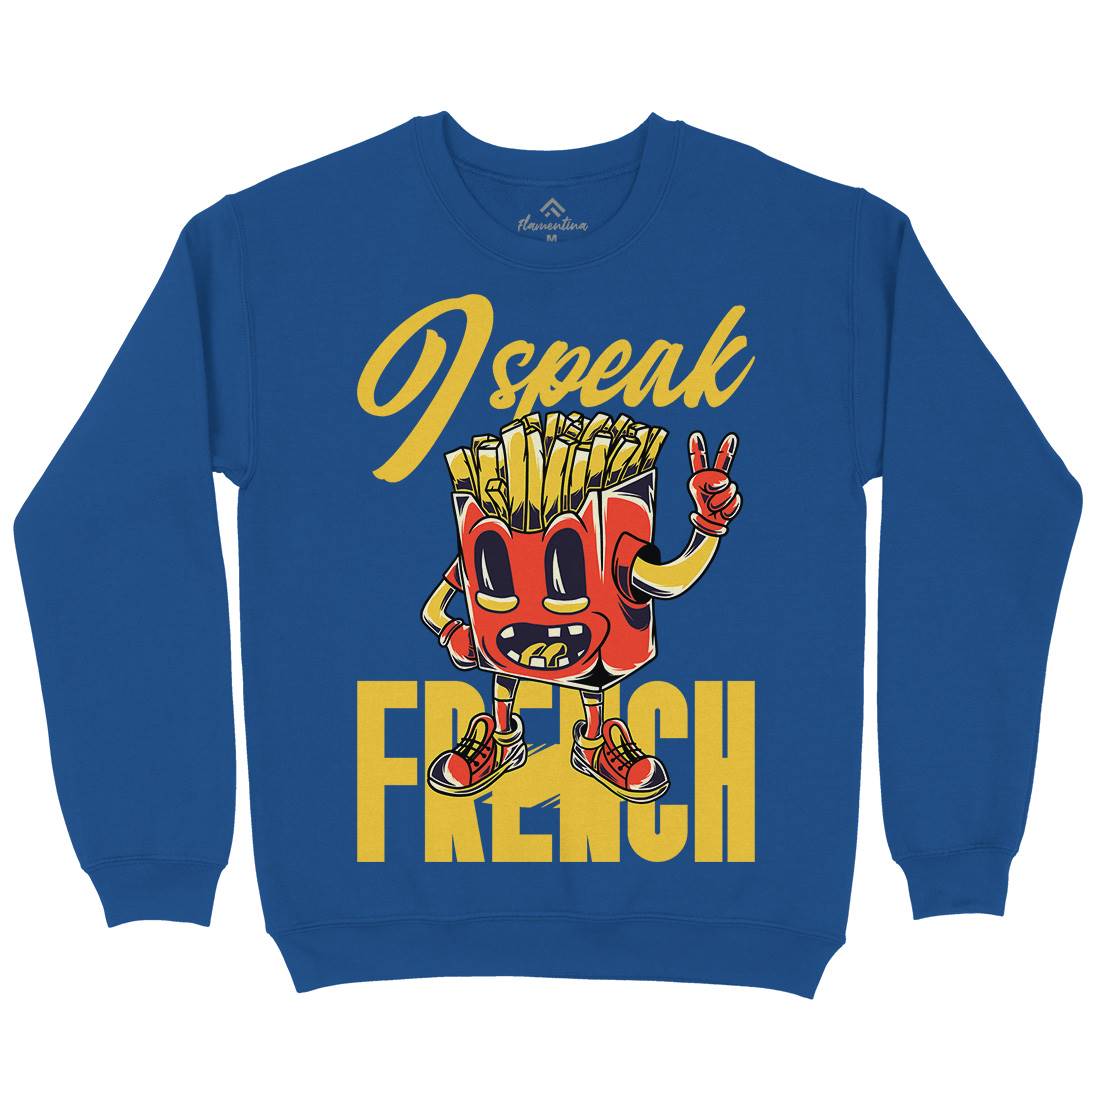 I Speak French Kids Crew Neck Sweatshirt Food C817